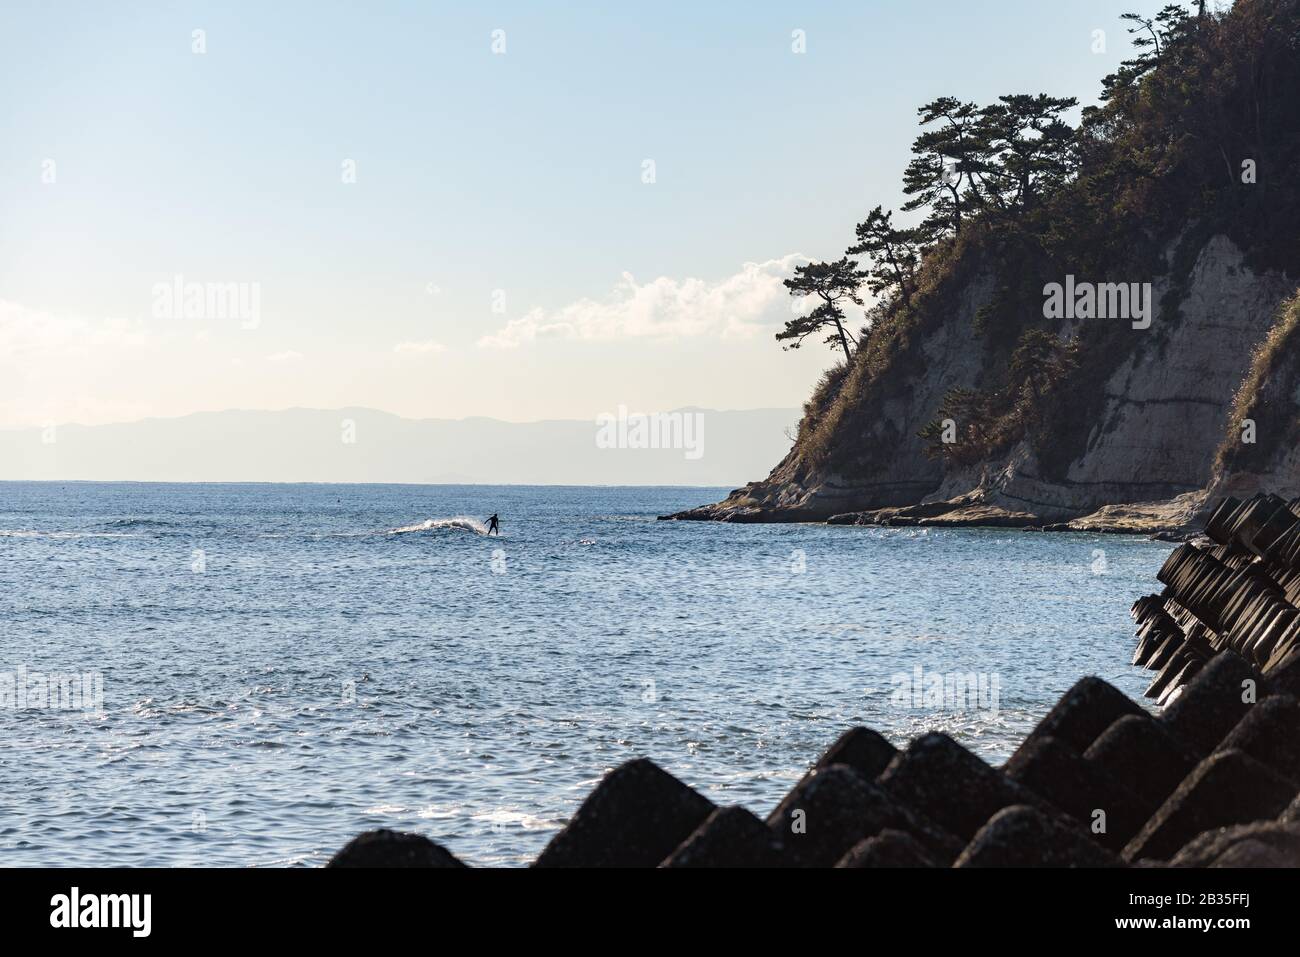 A surfer rides a wave towards Cape Imamuragasaki, Sagami Bay, close to Enoshima Island, setting of the Tokyo 2020 Summer Olympics sailing events Stock Photo